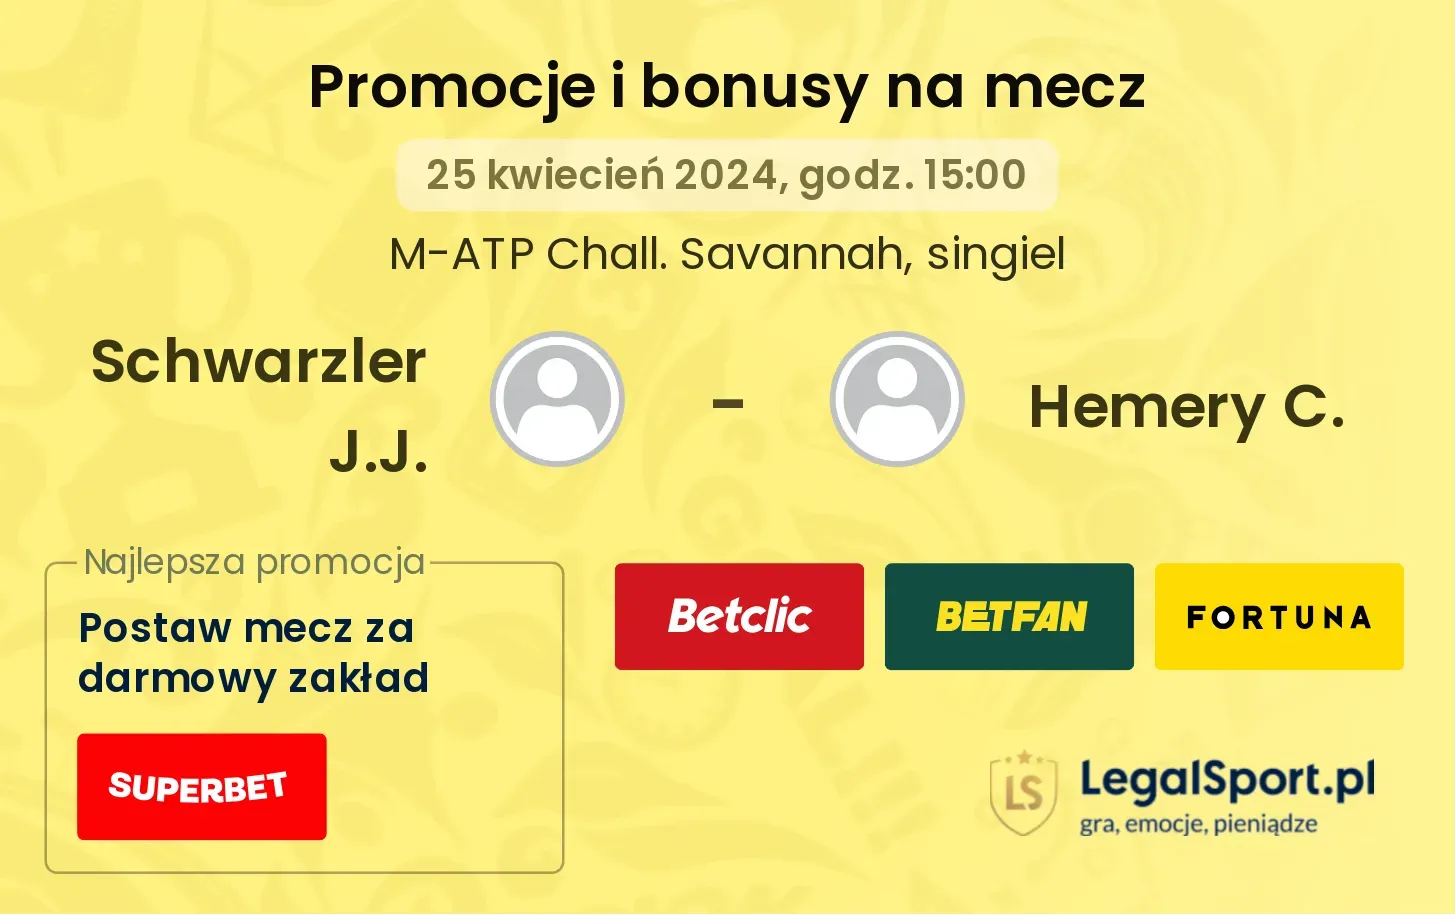 Schwarzler J.J. - Hemery C. promocje bonusy na mecz